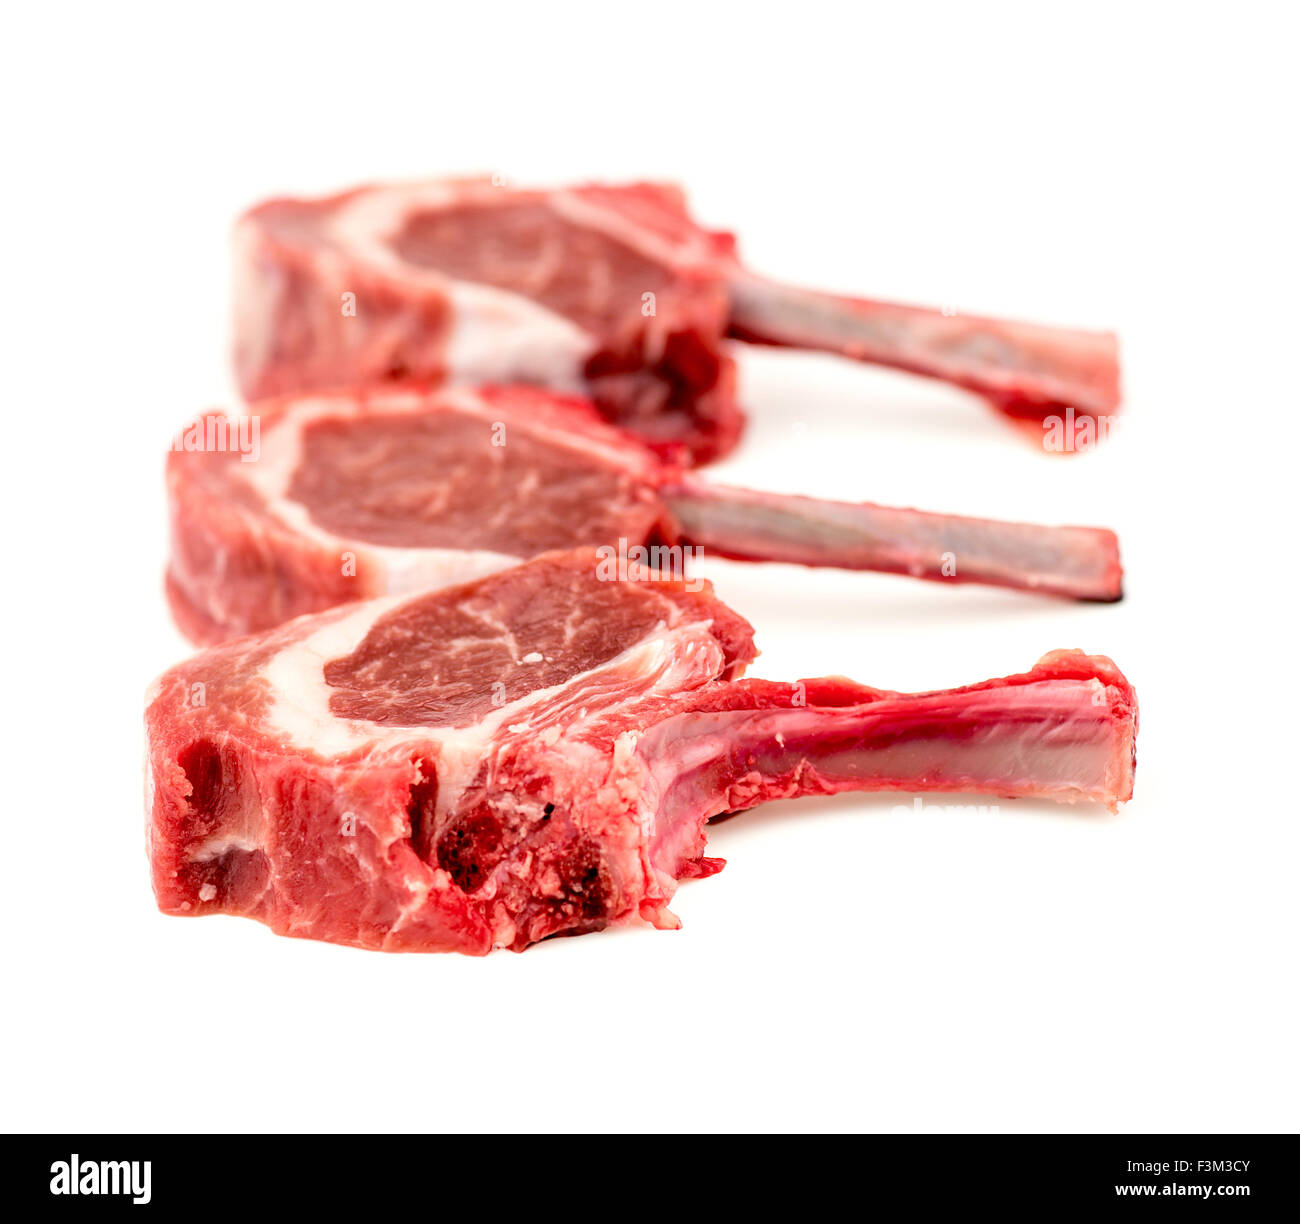 https://c8.alamy.com/comp/F3M3CY/juicy-organic-australian-lamb-chops-isolated-on-white-F3M3CY.jpg